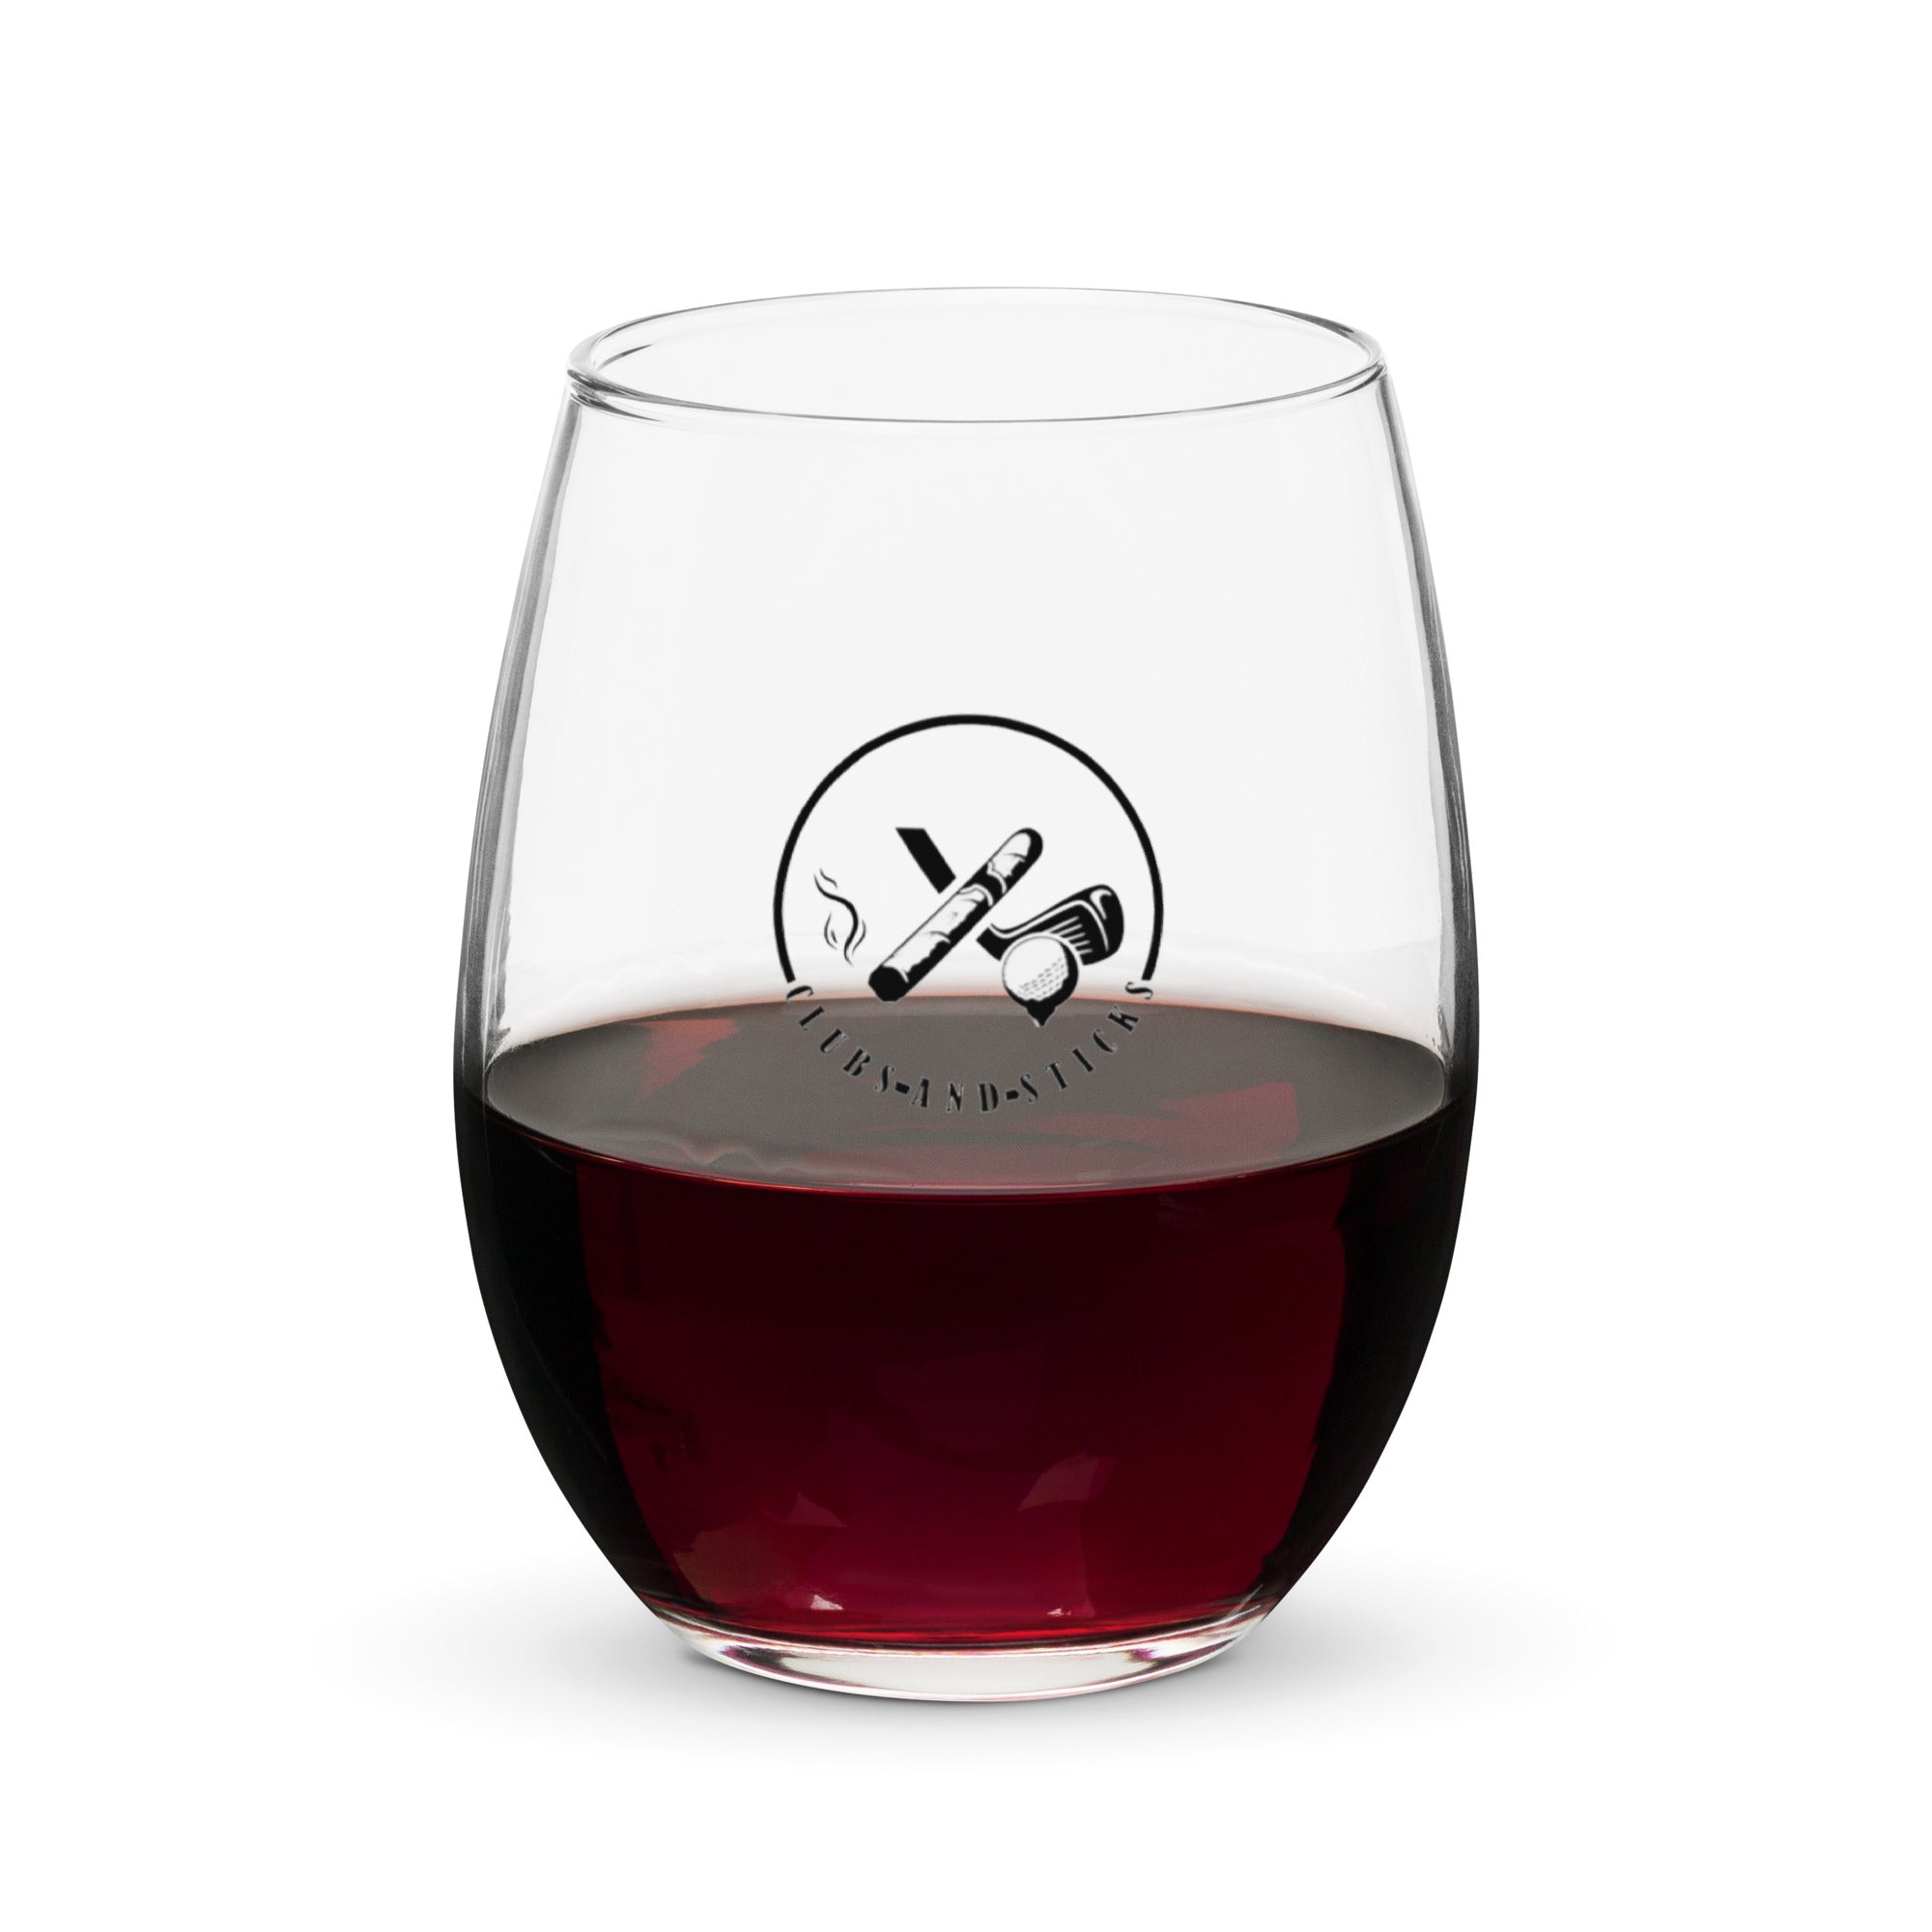 Stemless wine glass - 15 oz